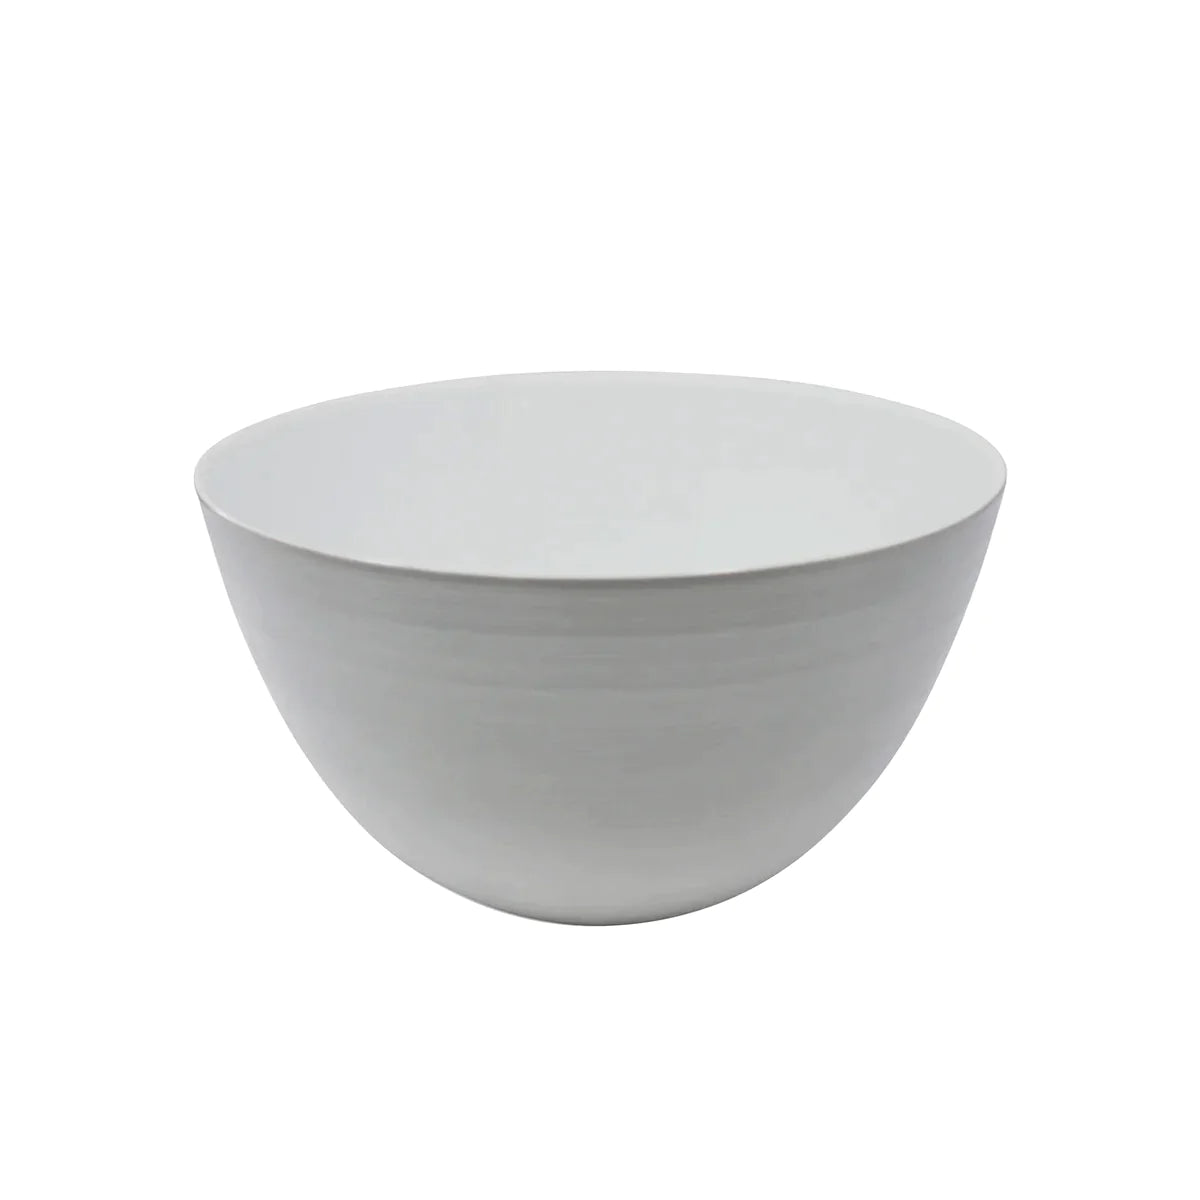 Hemisphere - Medium Serving Bowl